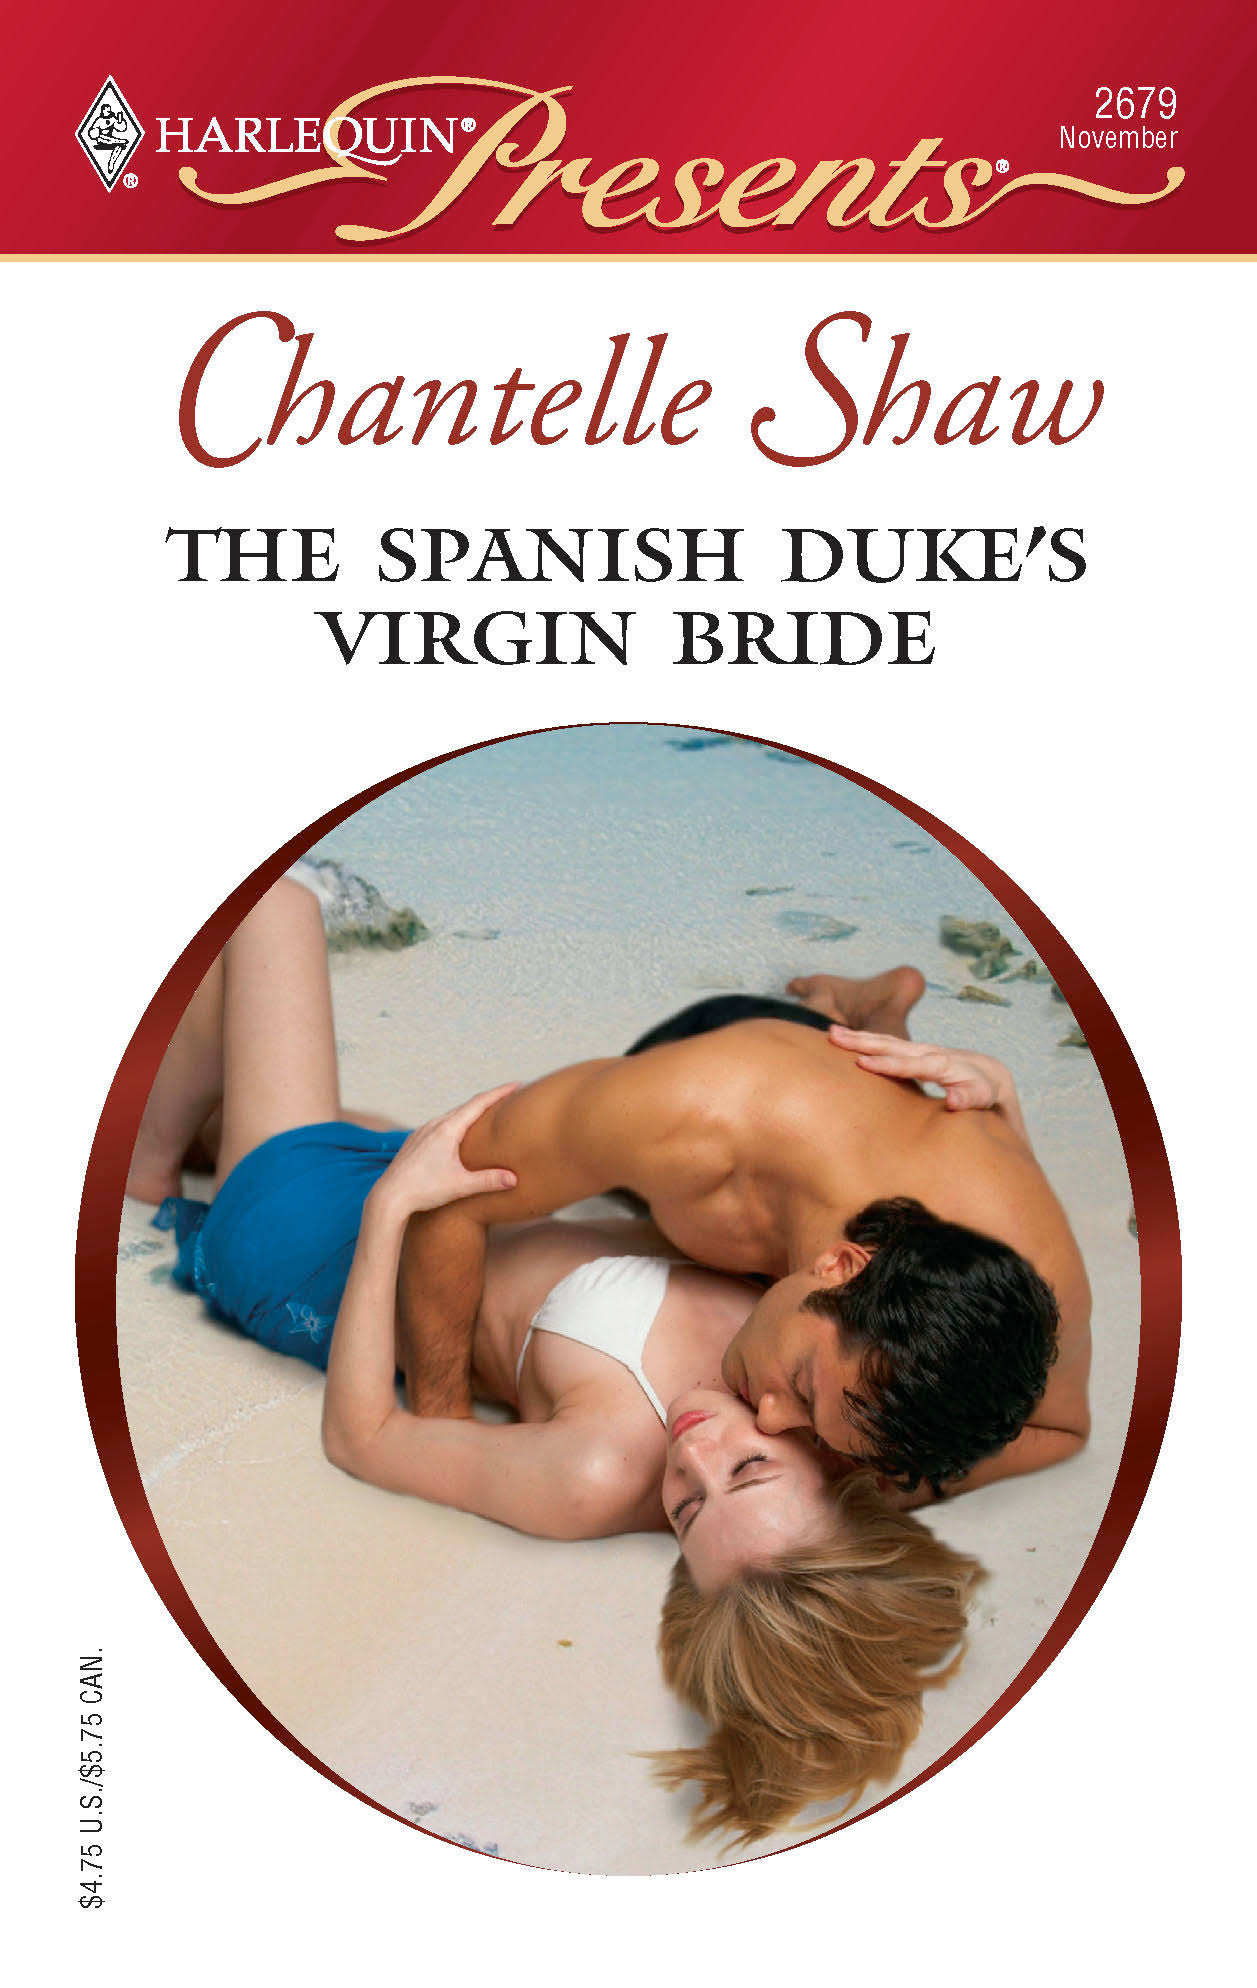 The Spanish Duke's Virgin Bride by Shaw, Chantelle - 0373126794 by Harlequin Presents | Thriftbooks.com